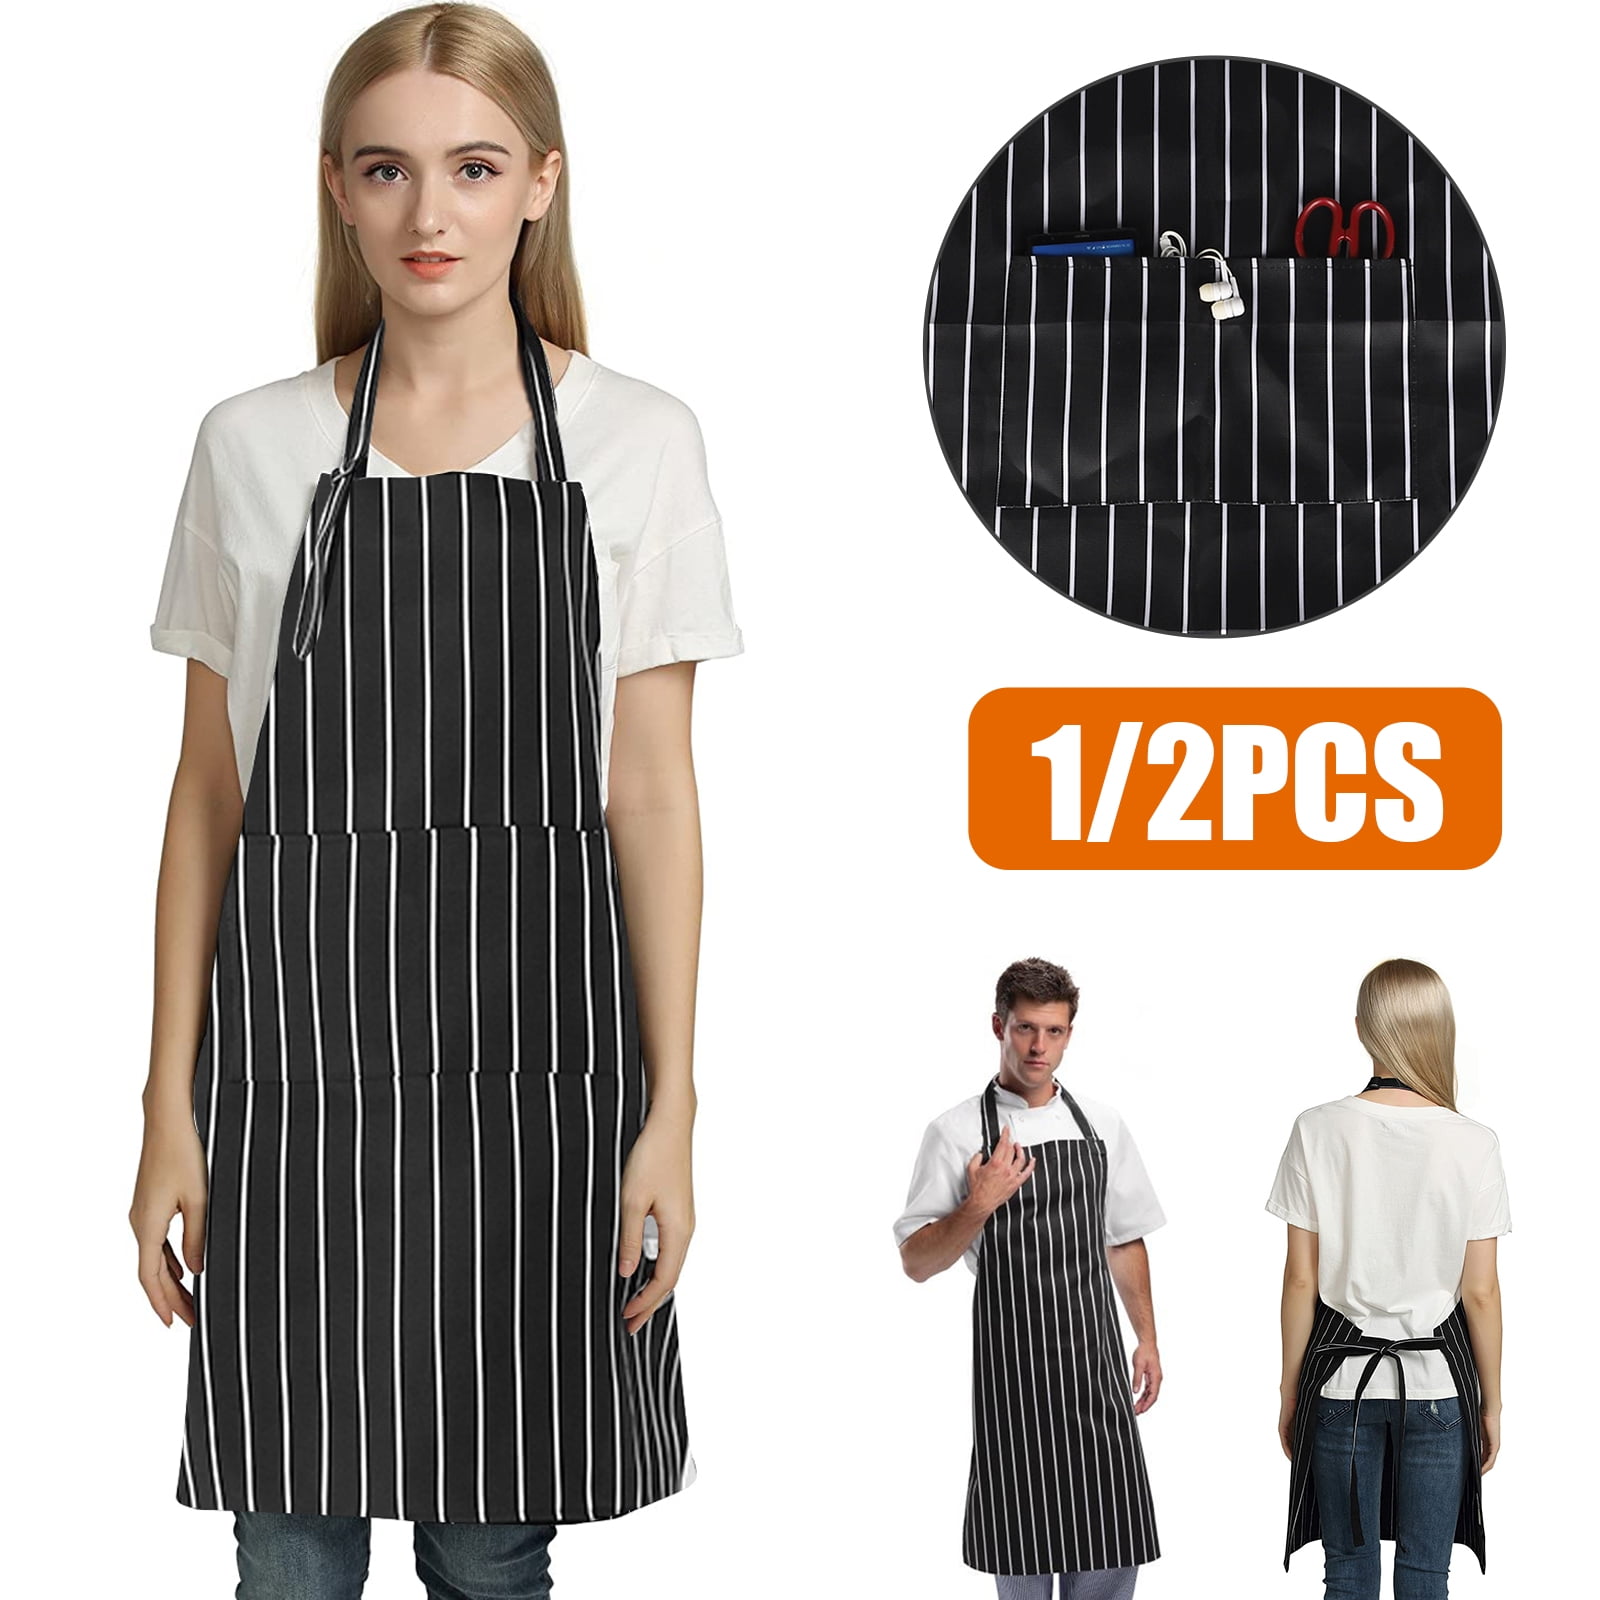 craft apron. apron with pockets full apron floral apron cook/chef apron Women’s apron